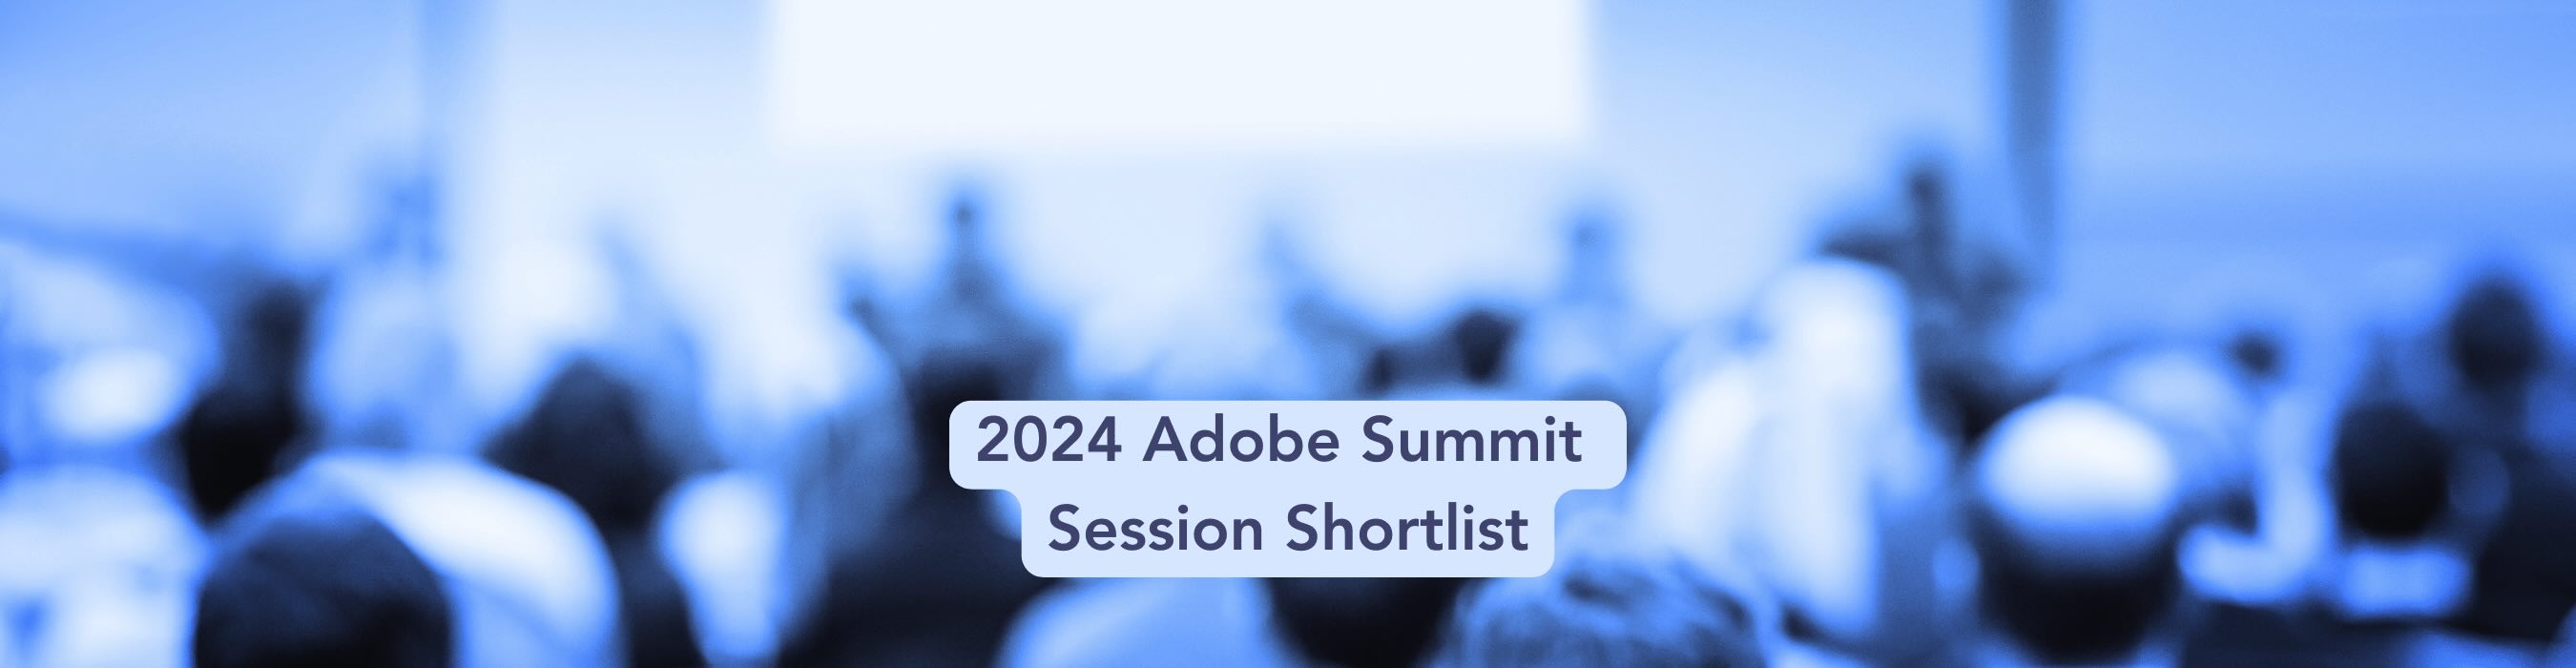 2024 Adobe Summit Session Shortlist